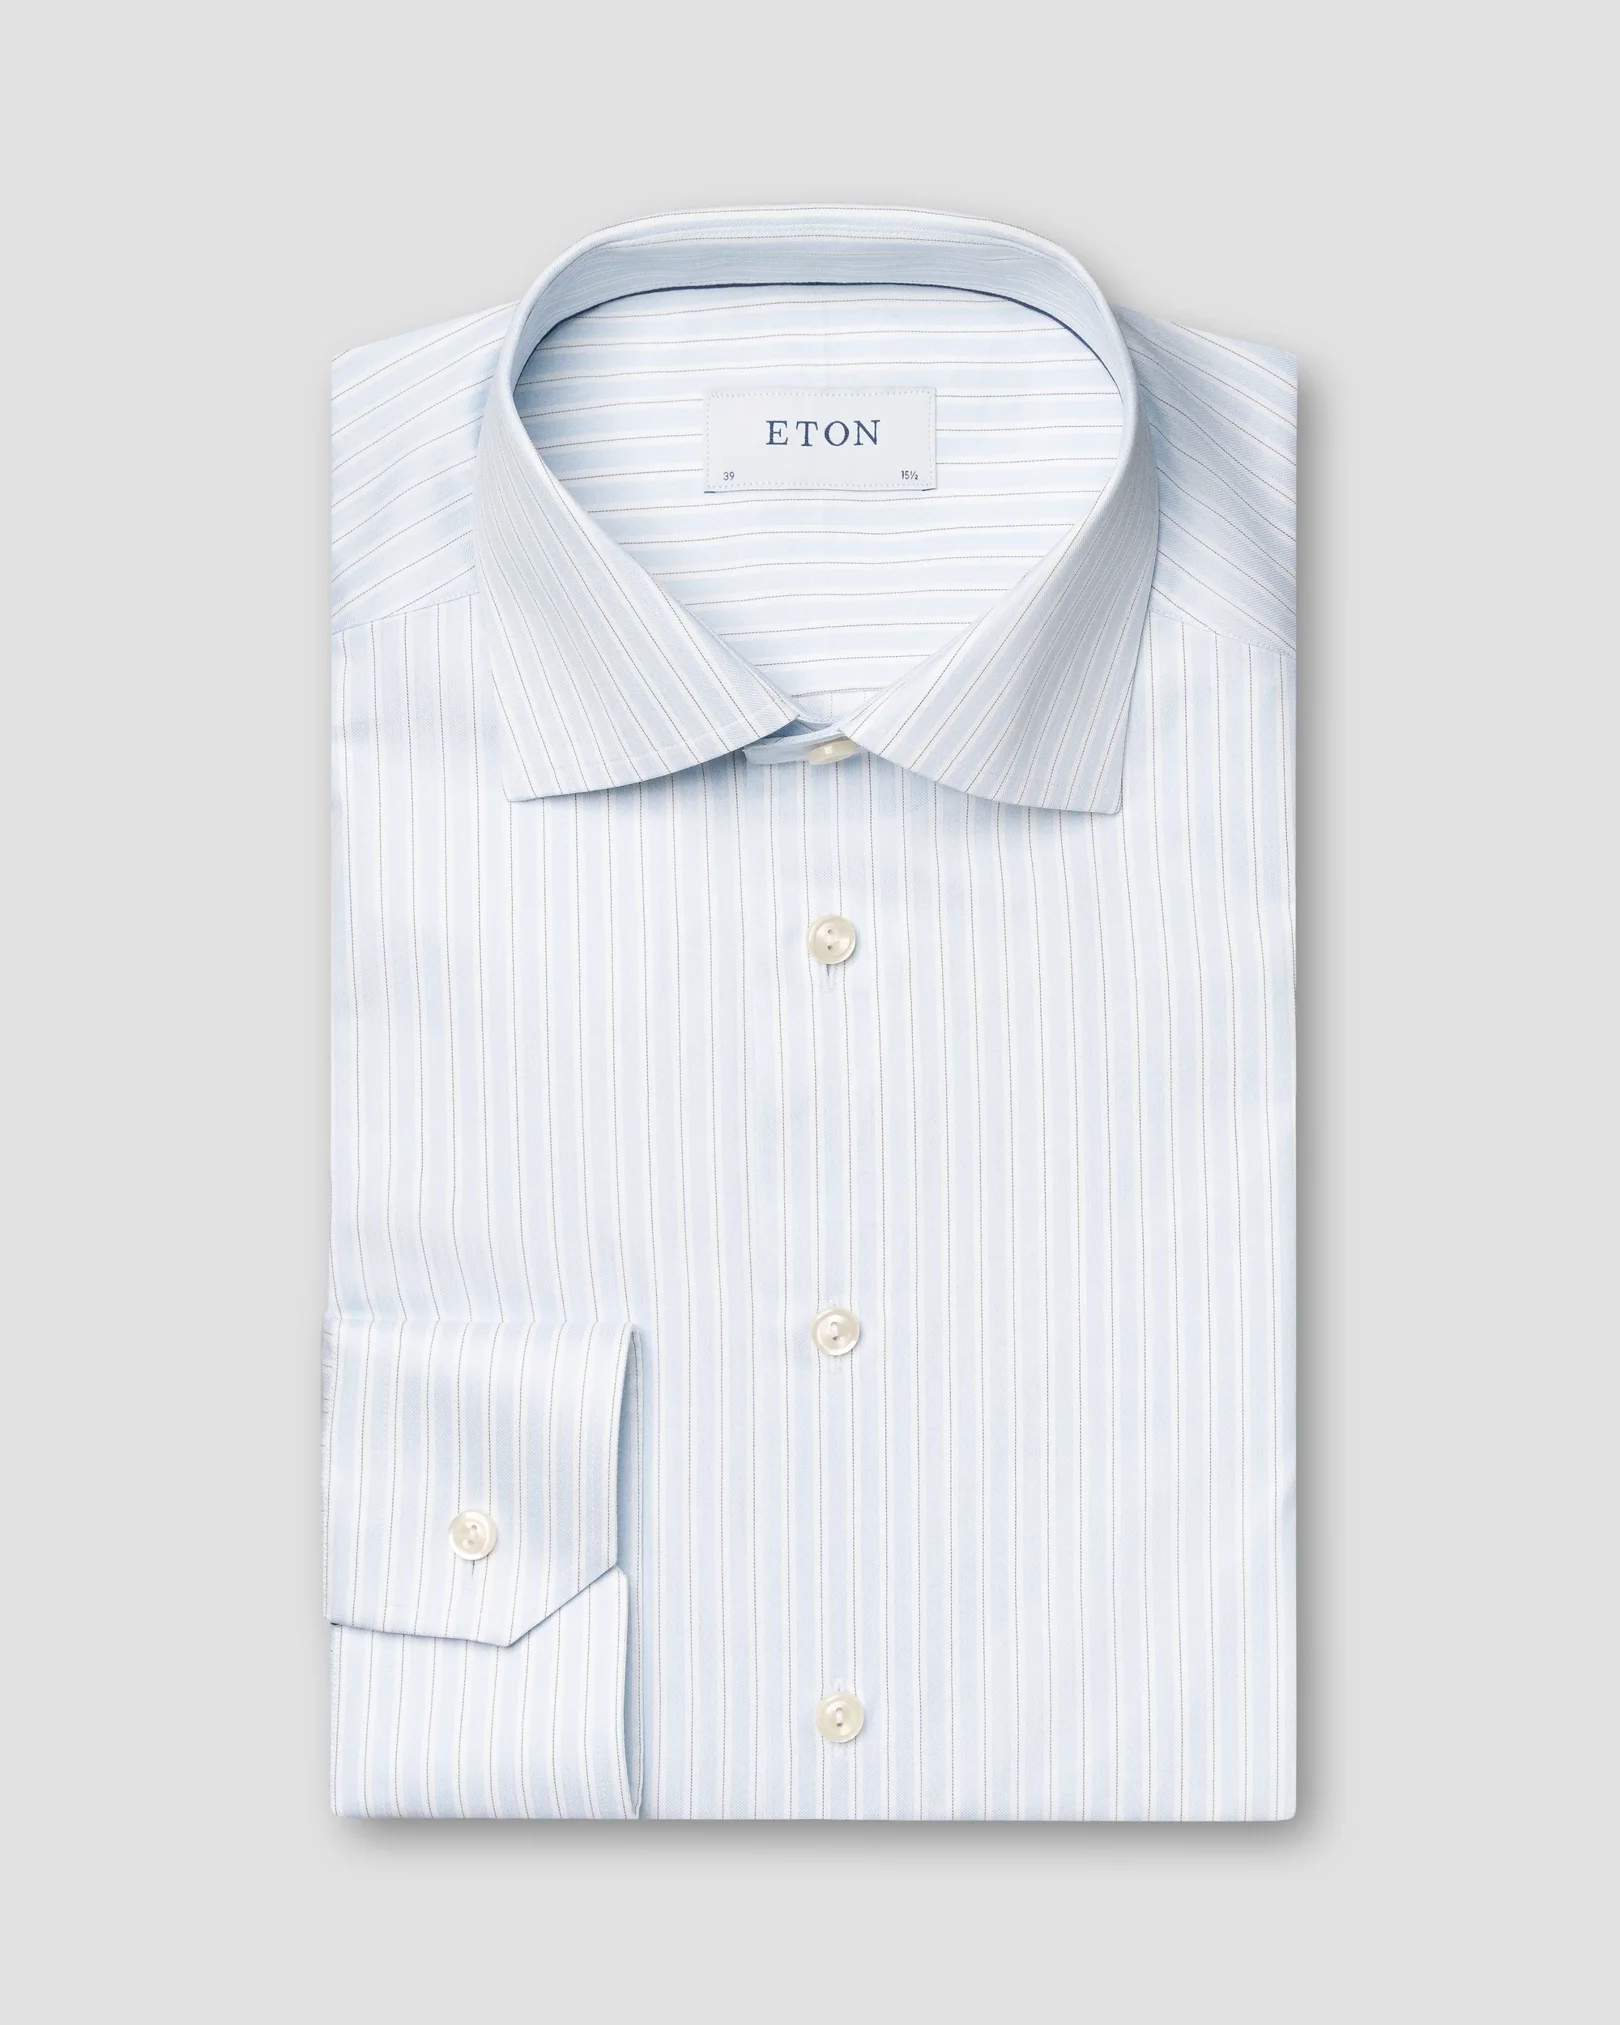 Eton - light blue striped twill shirt